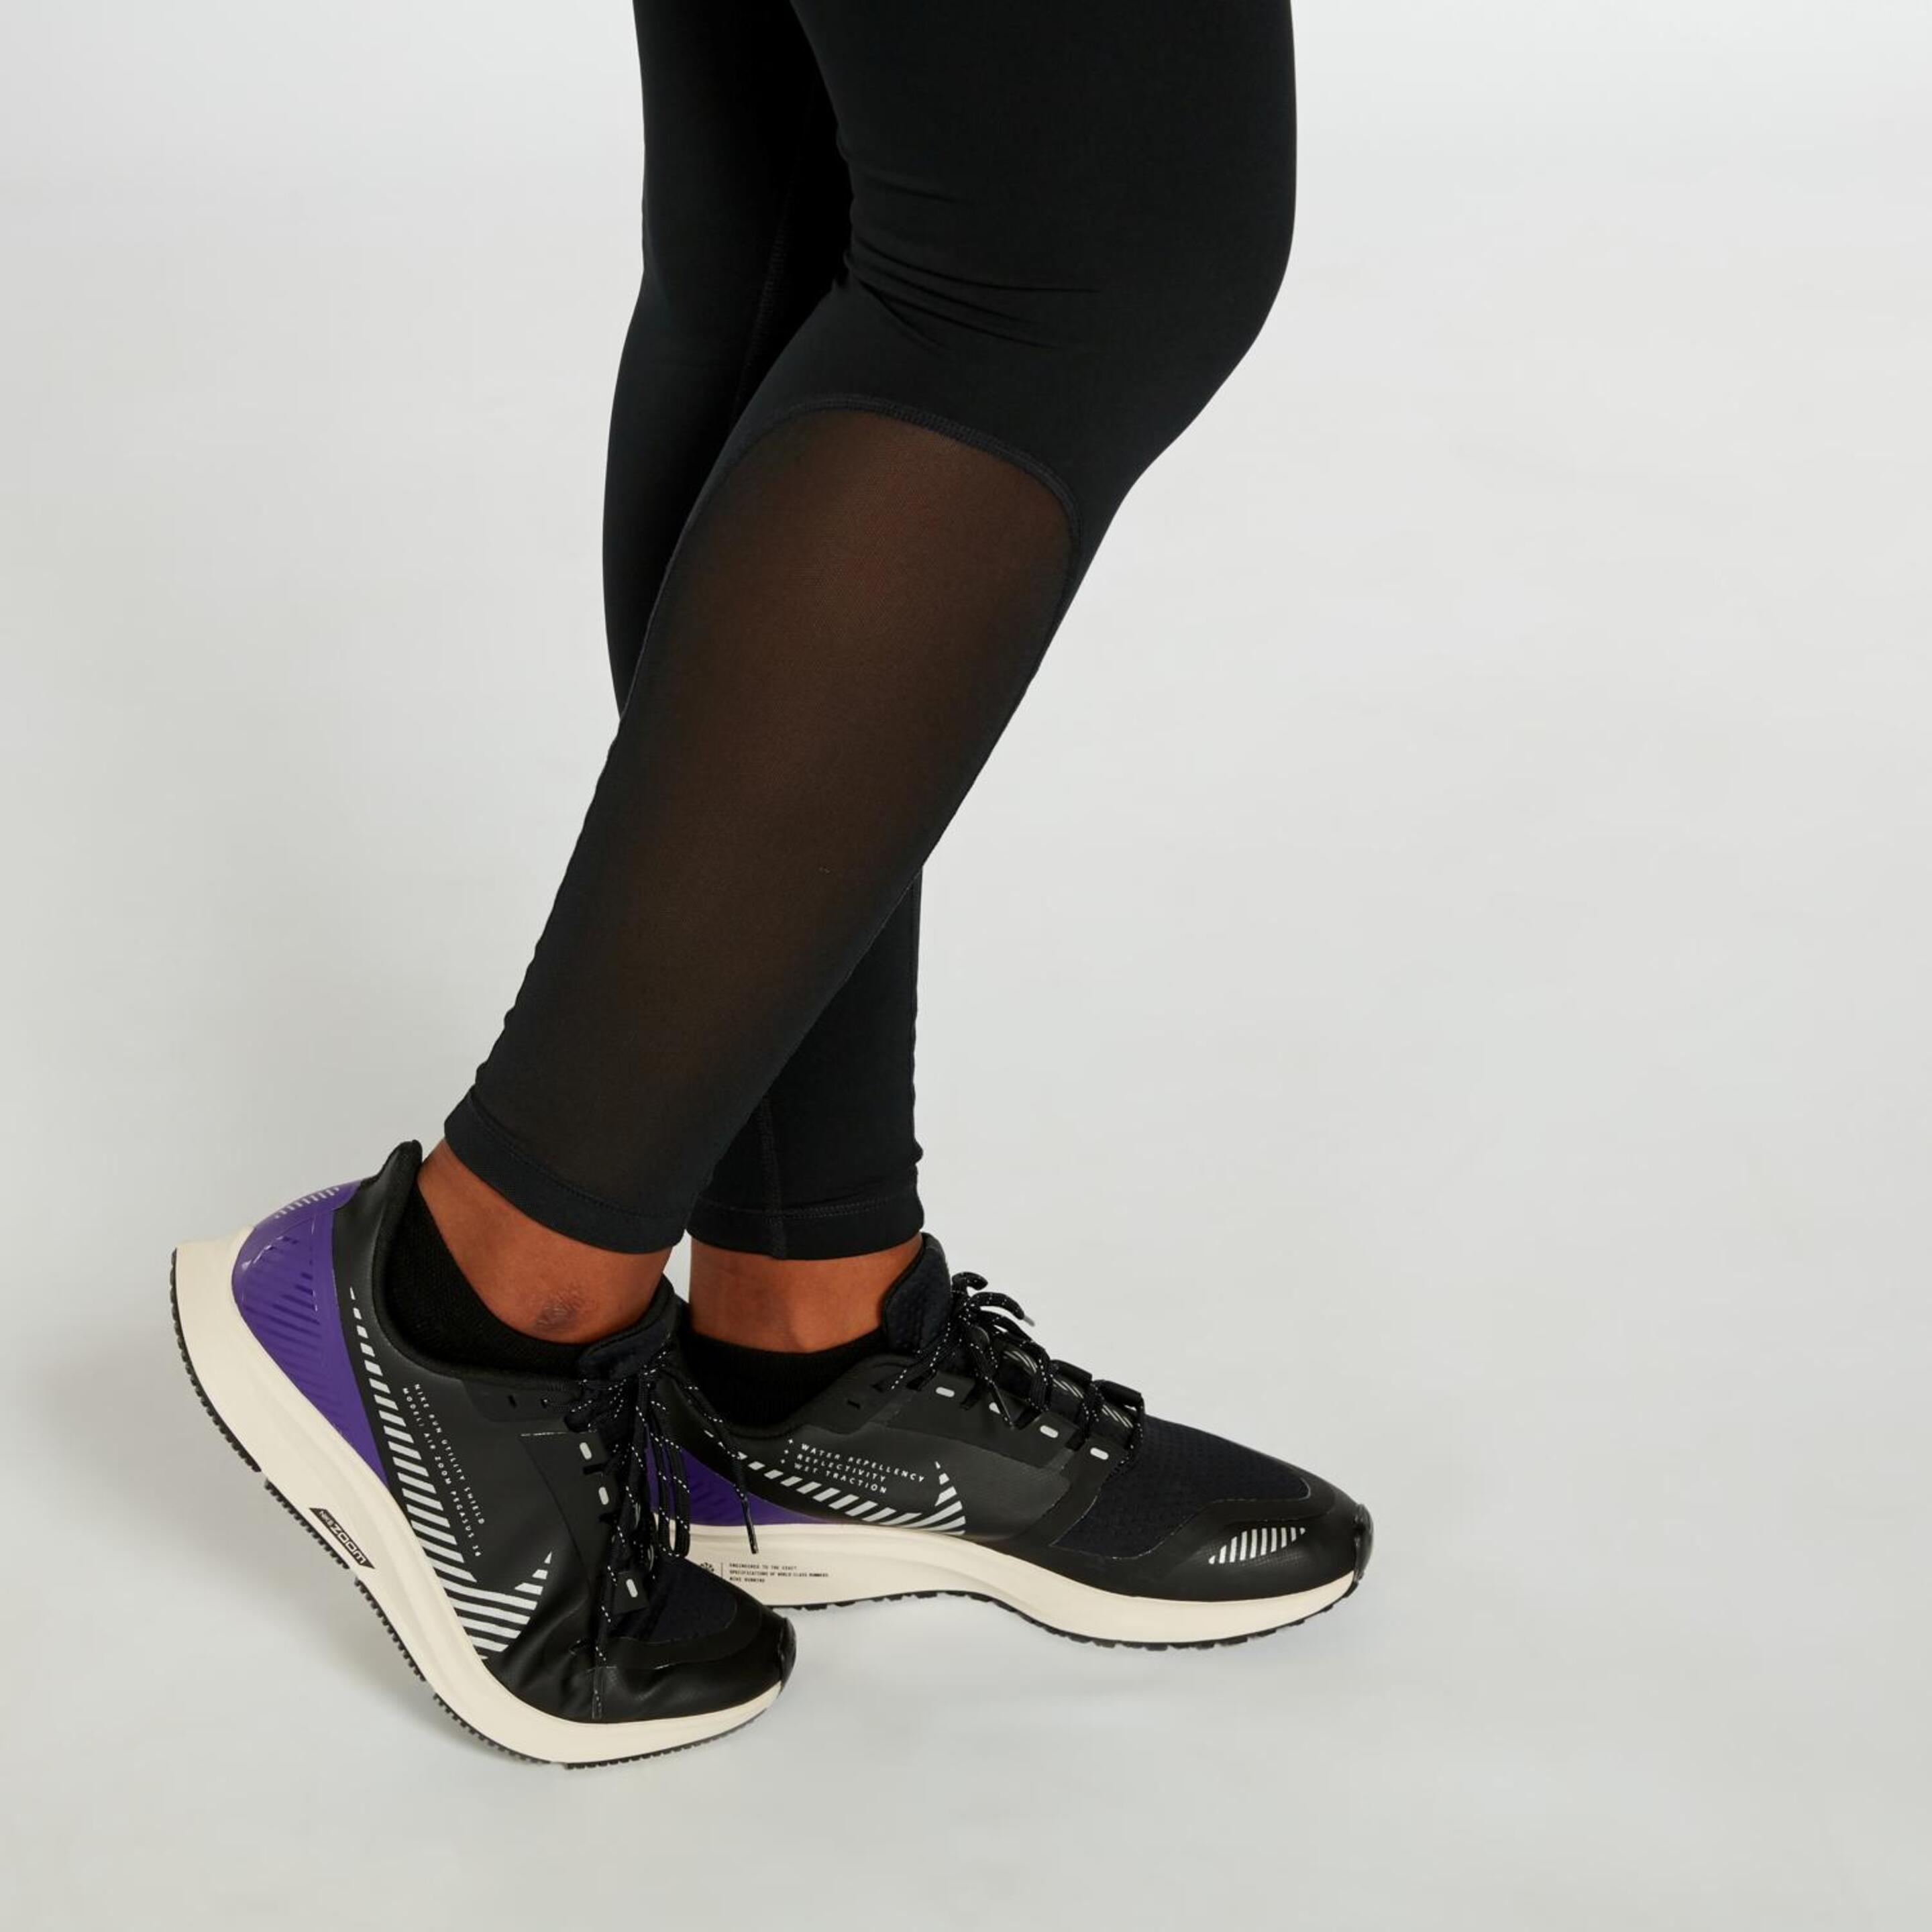 Leggings Nike Pro